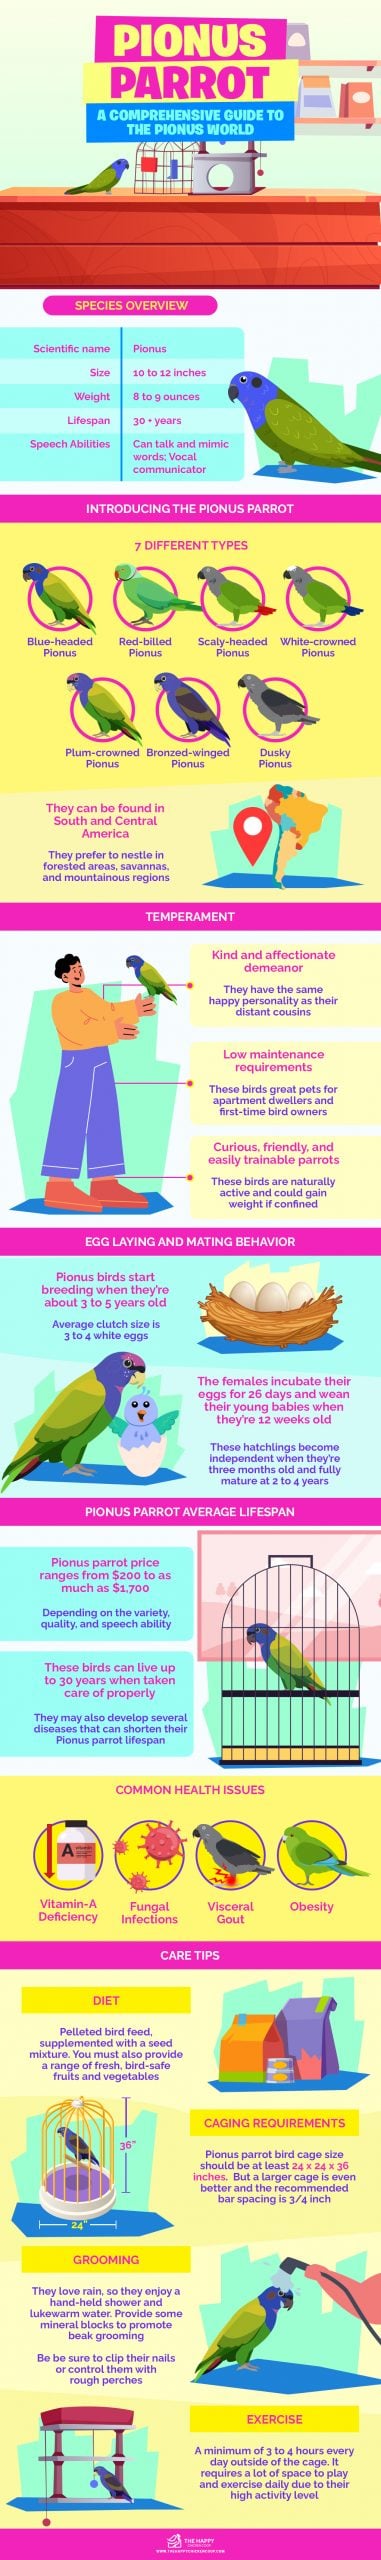 Pionus Parrot信息图表